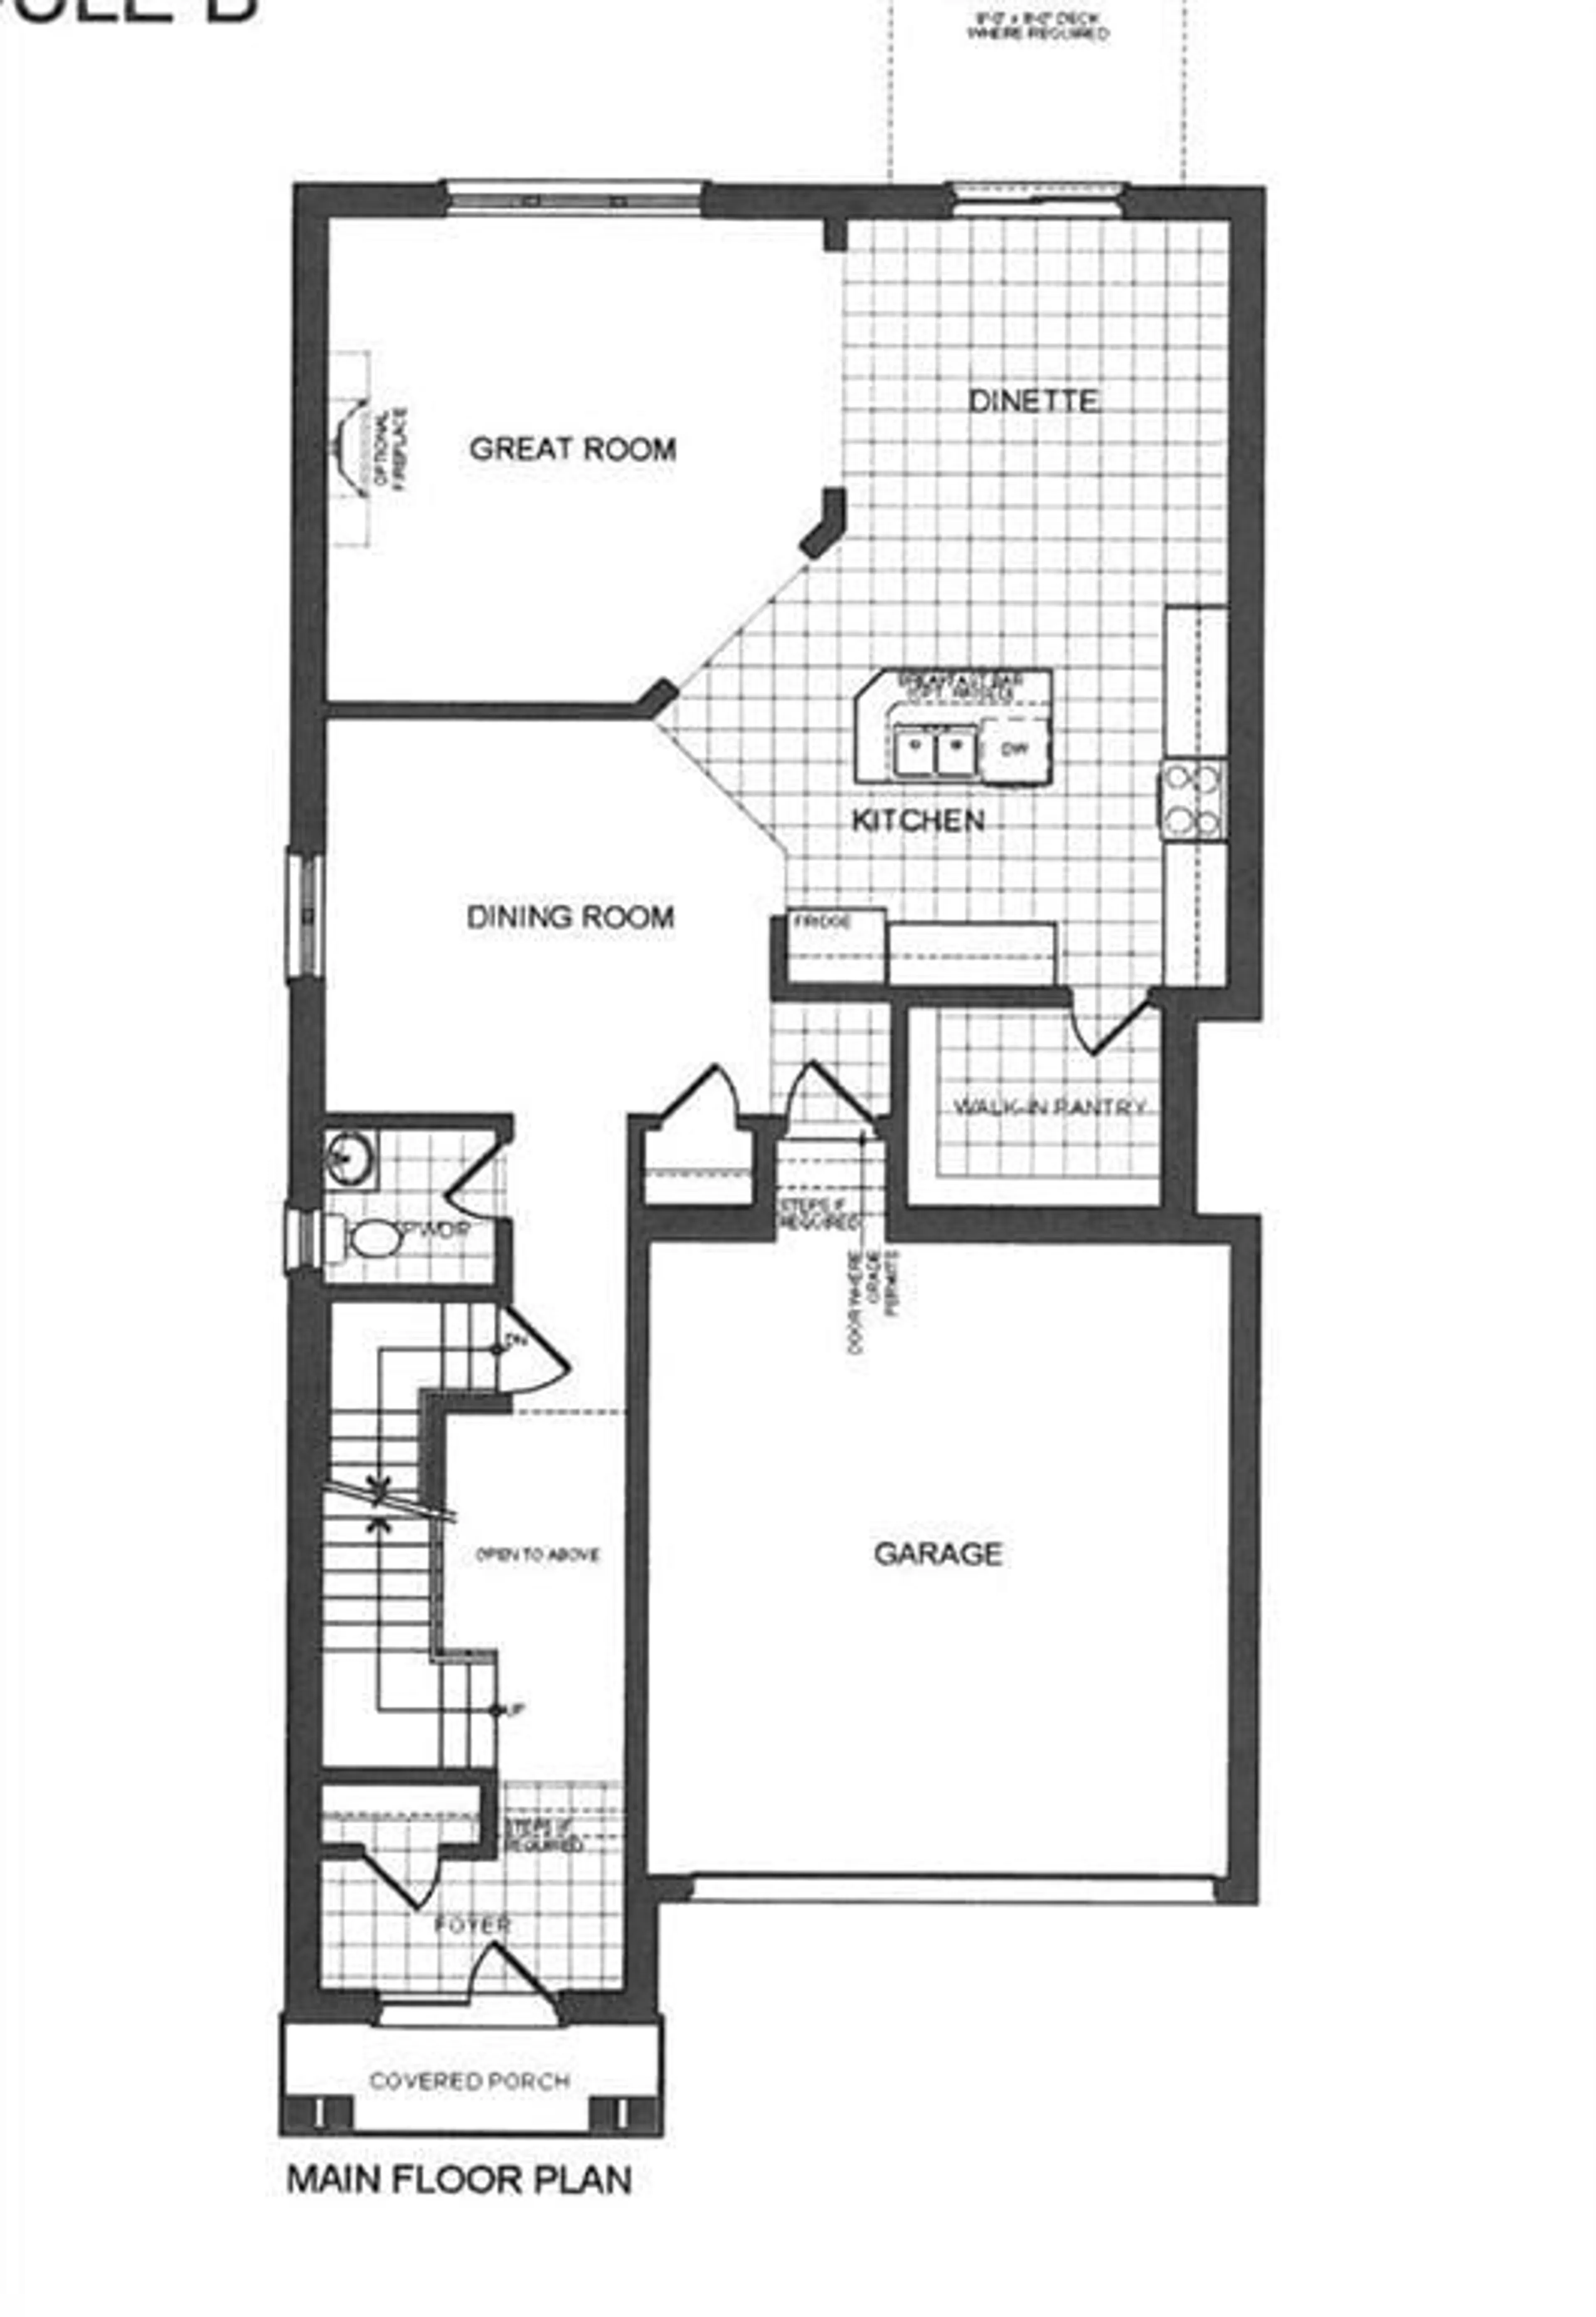 Floor plan for LOT 279 Street, Paris Ontario L9L 9L9